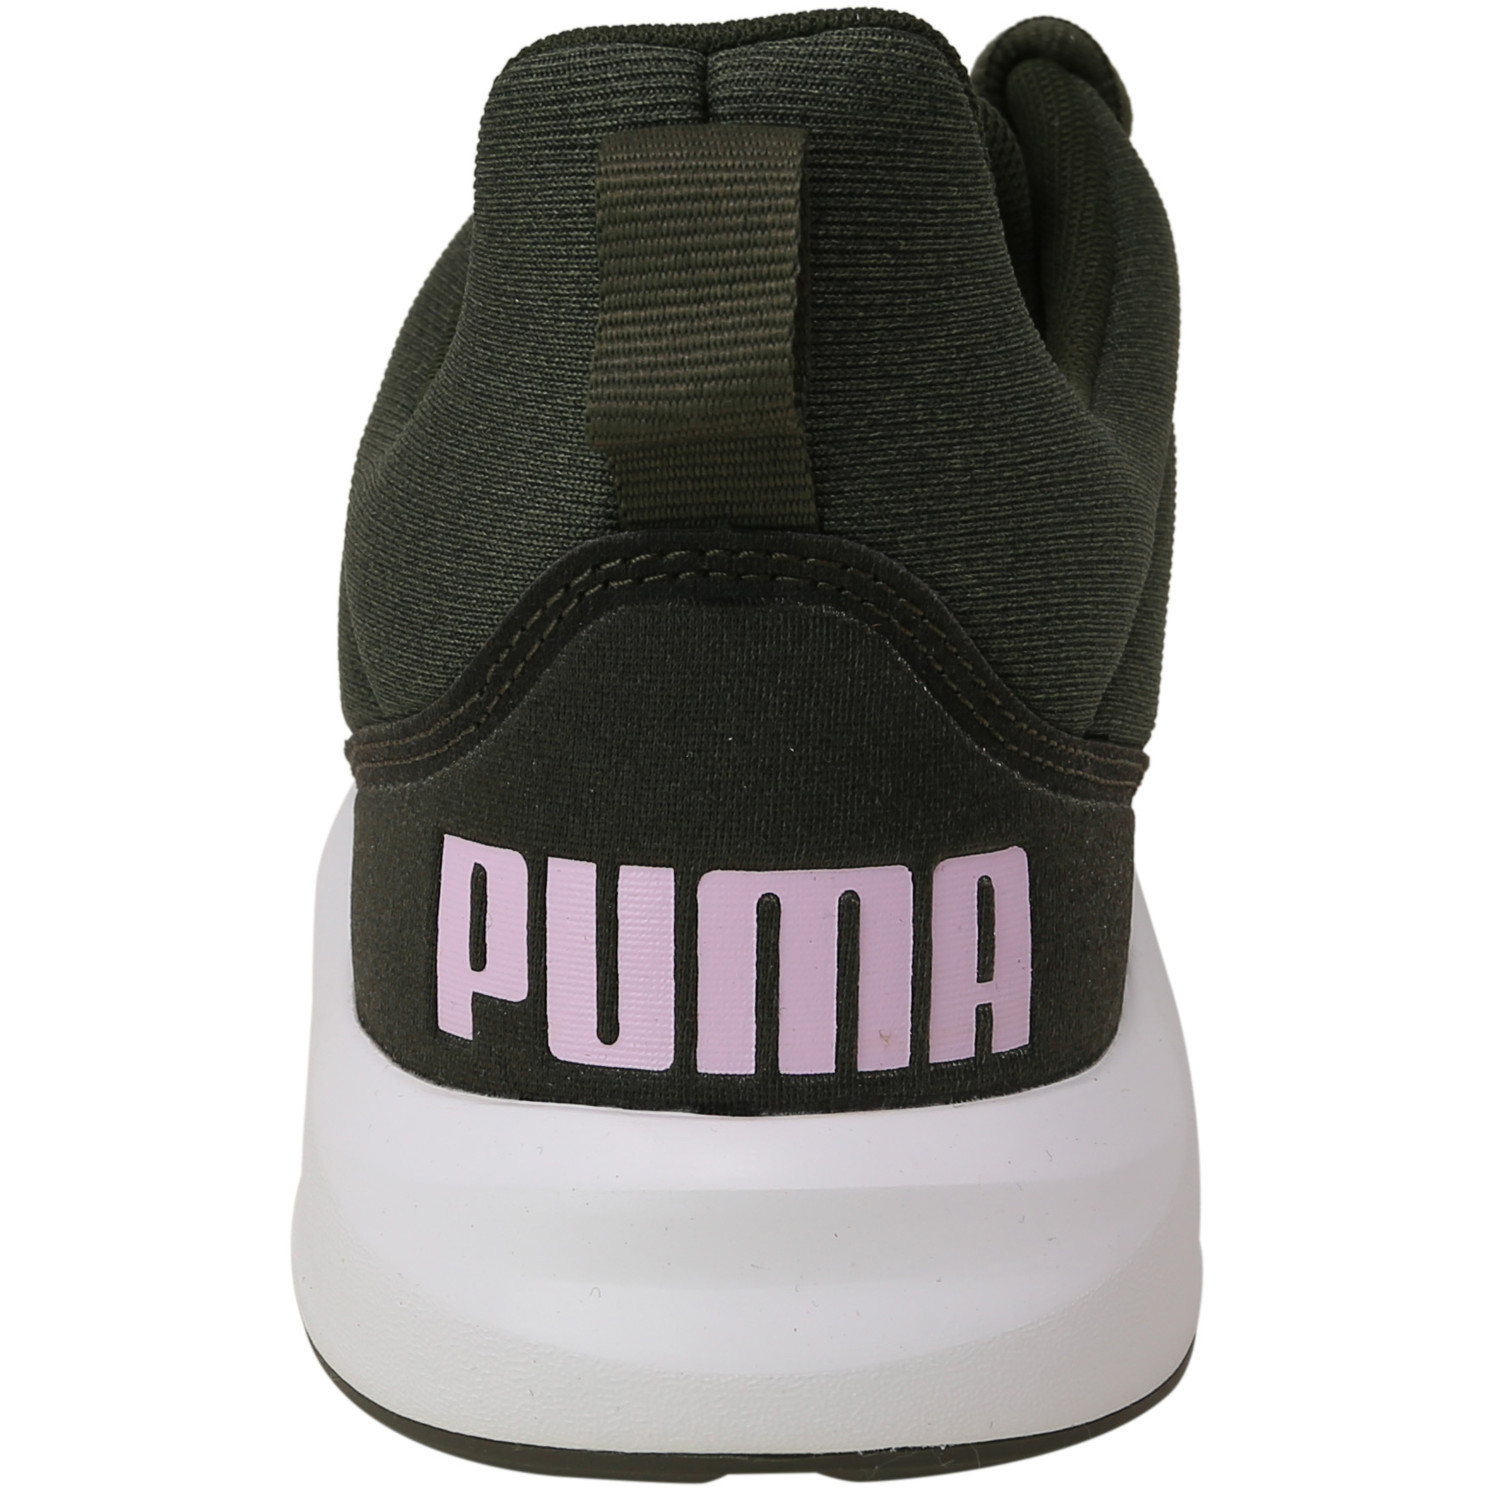 women's puma prodigy training shoes